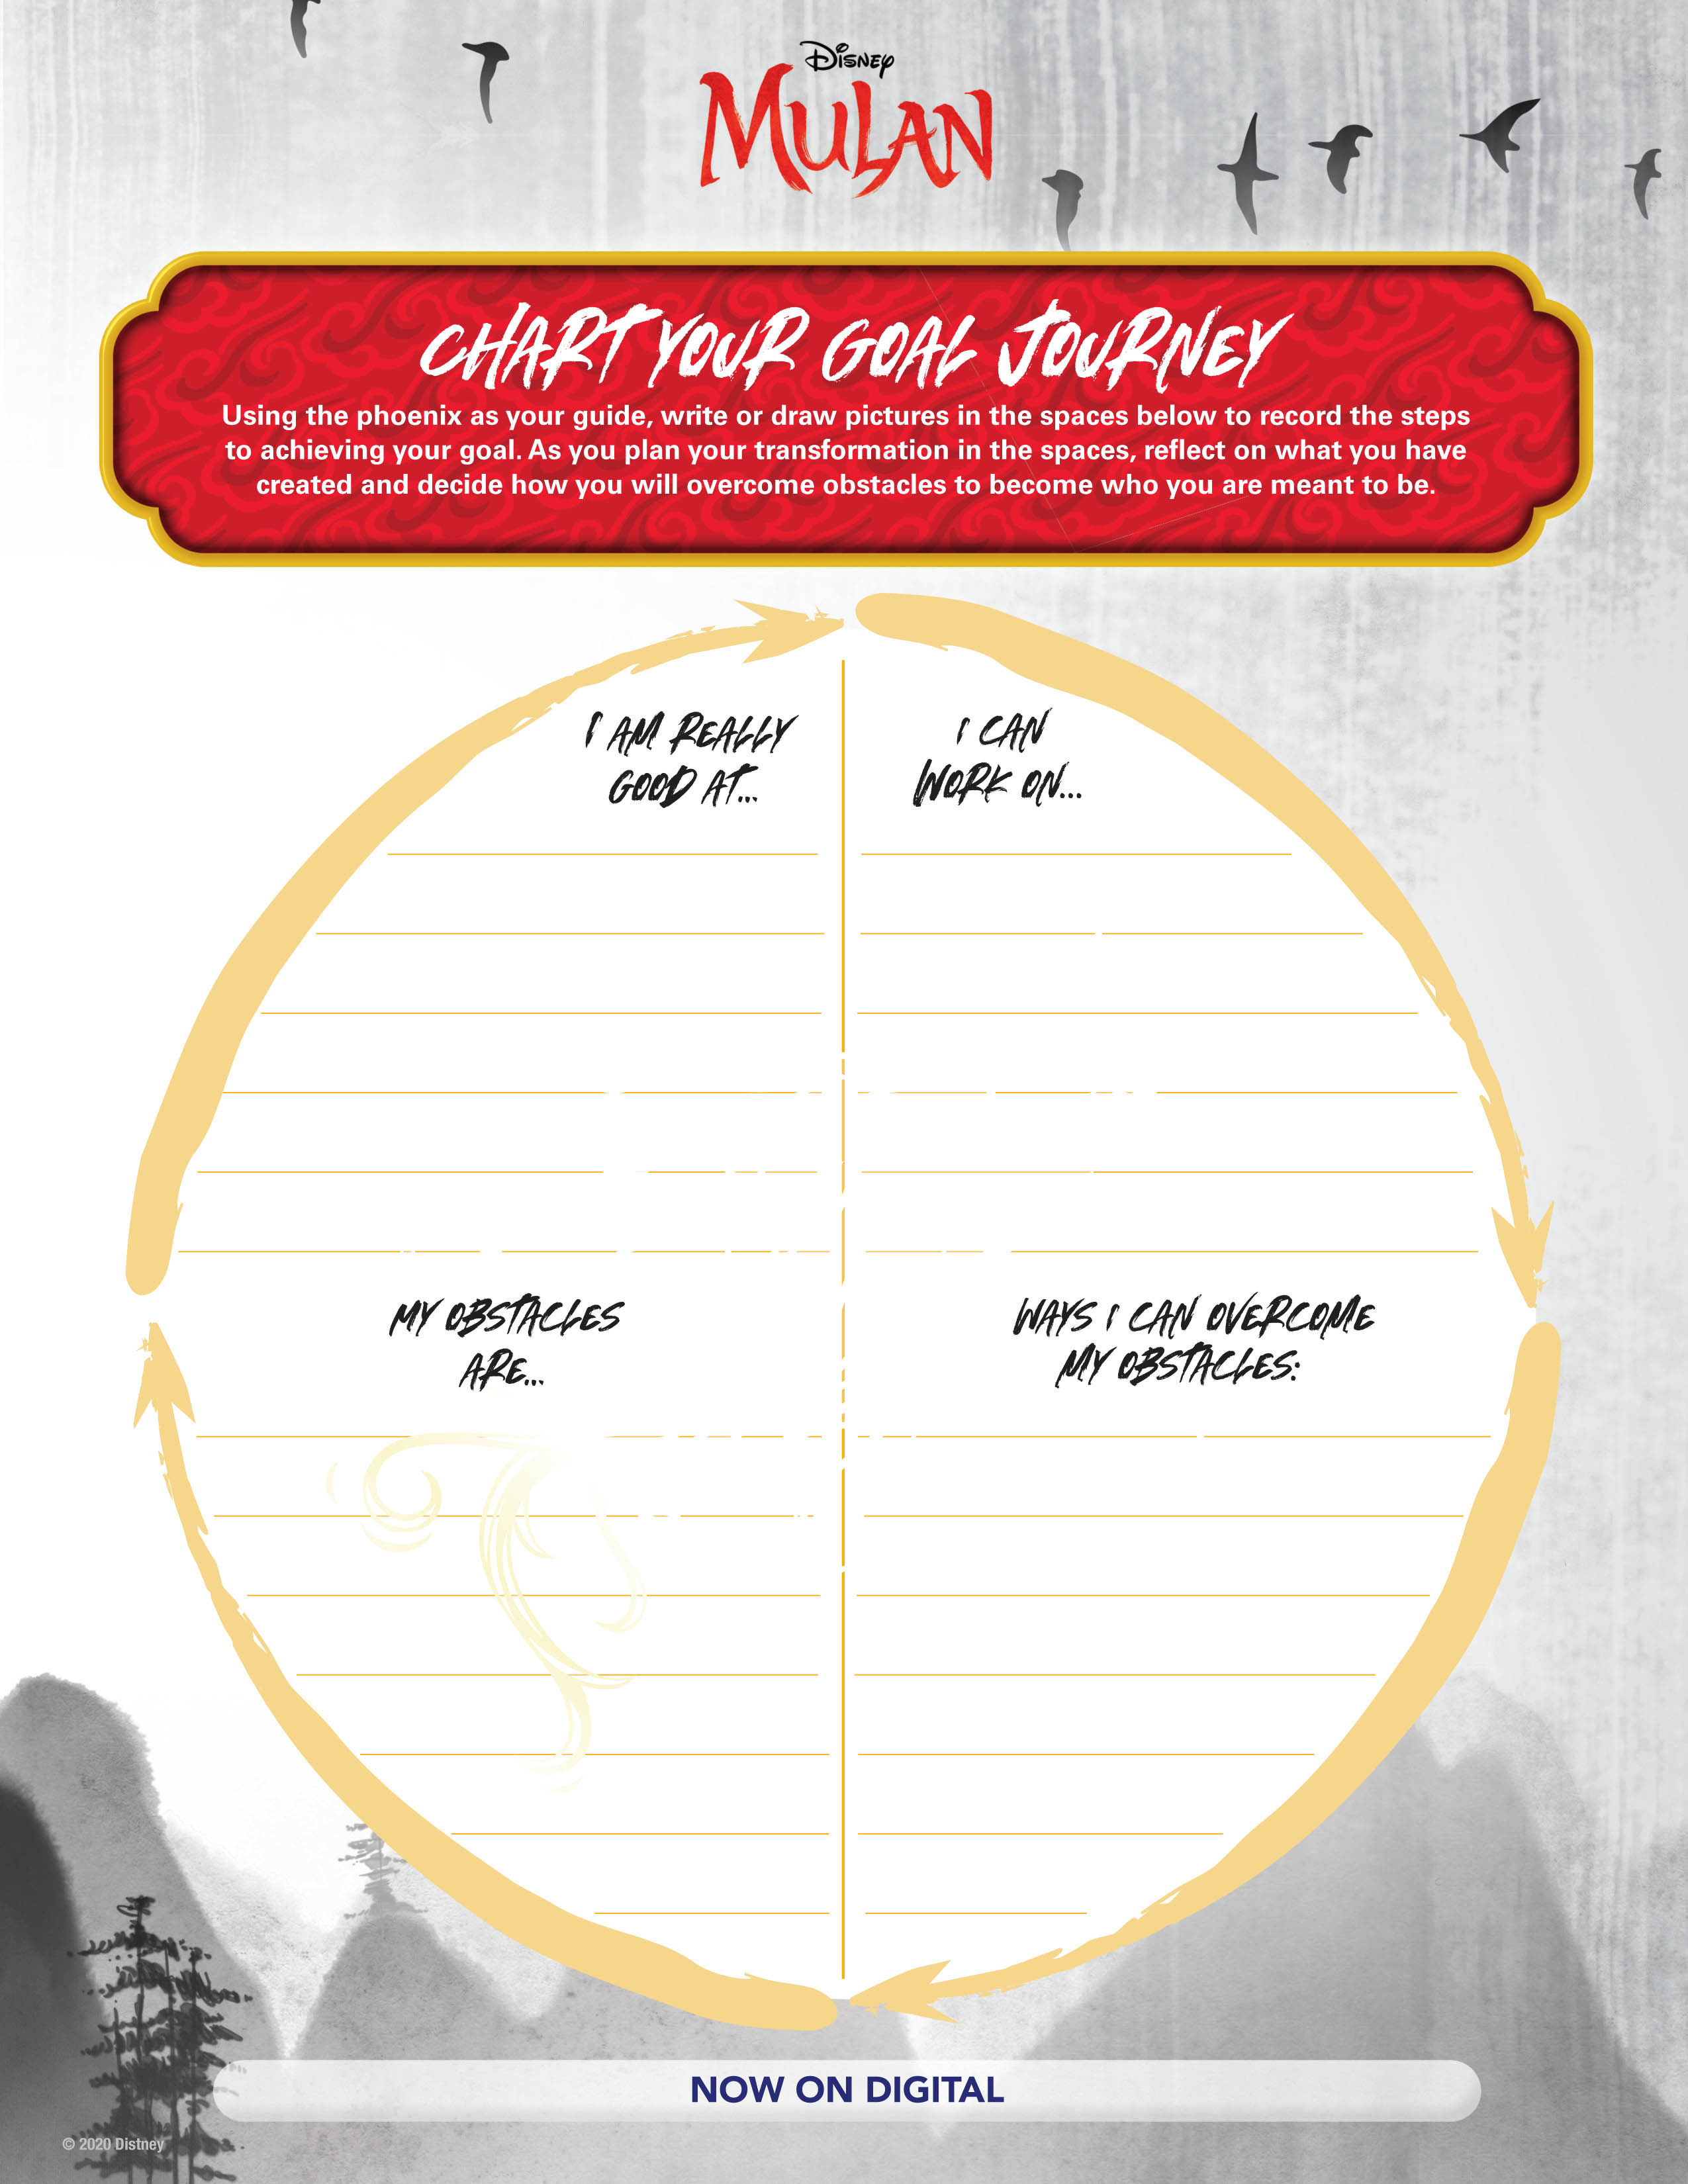 Disney's live action Mulan activity sheet goal journey